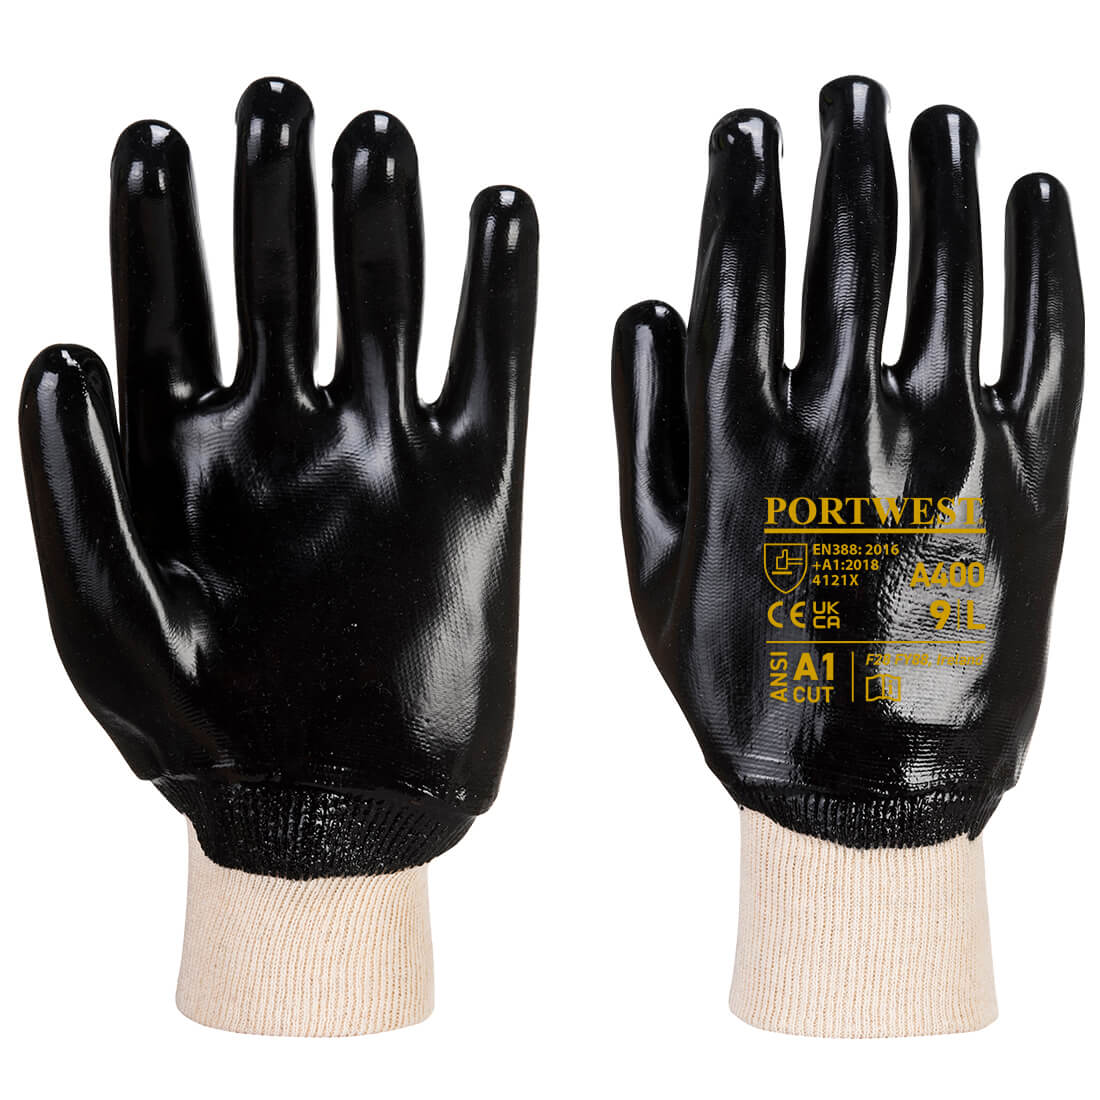 A400 Portwest® Liquid Resistant PVC Coated Knitwrist Work Gloves